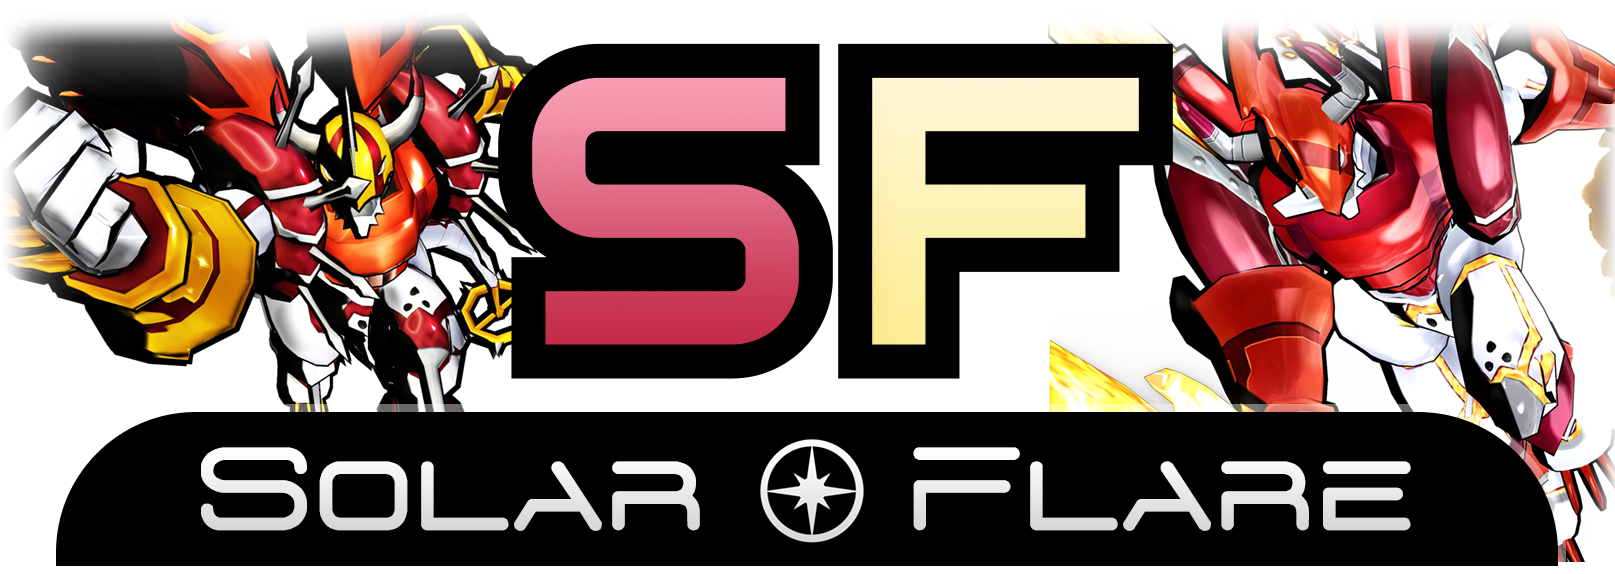 Logo for set SF with Shinegreymon and Burst mode